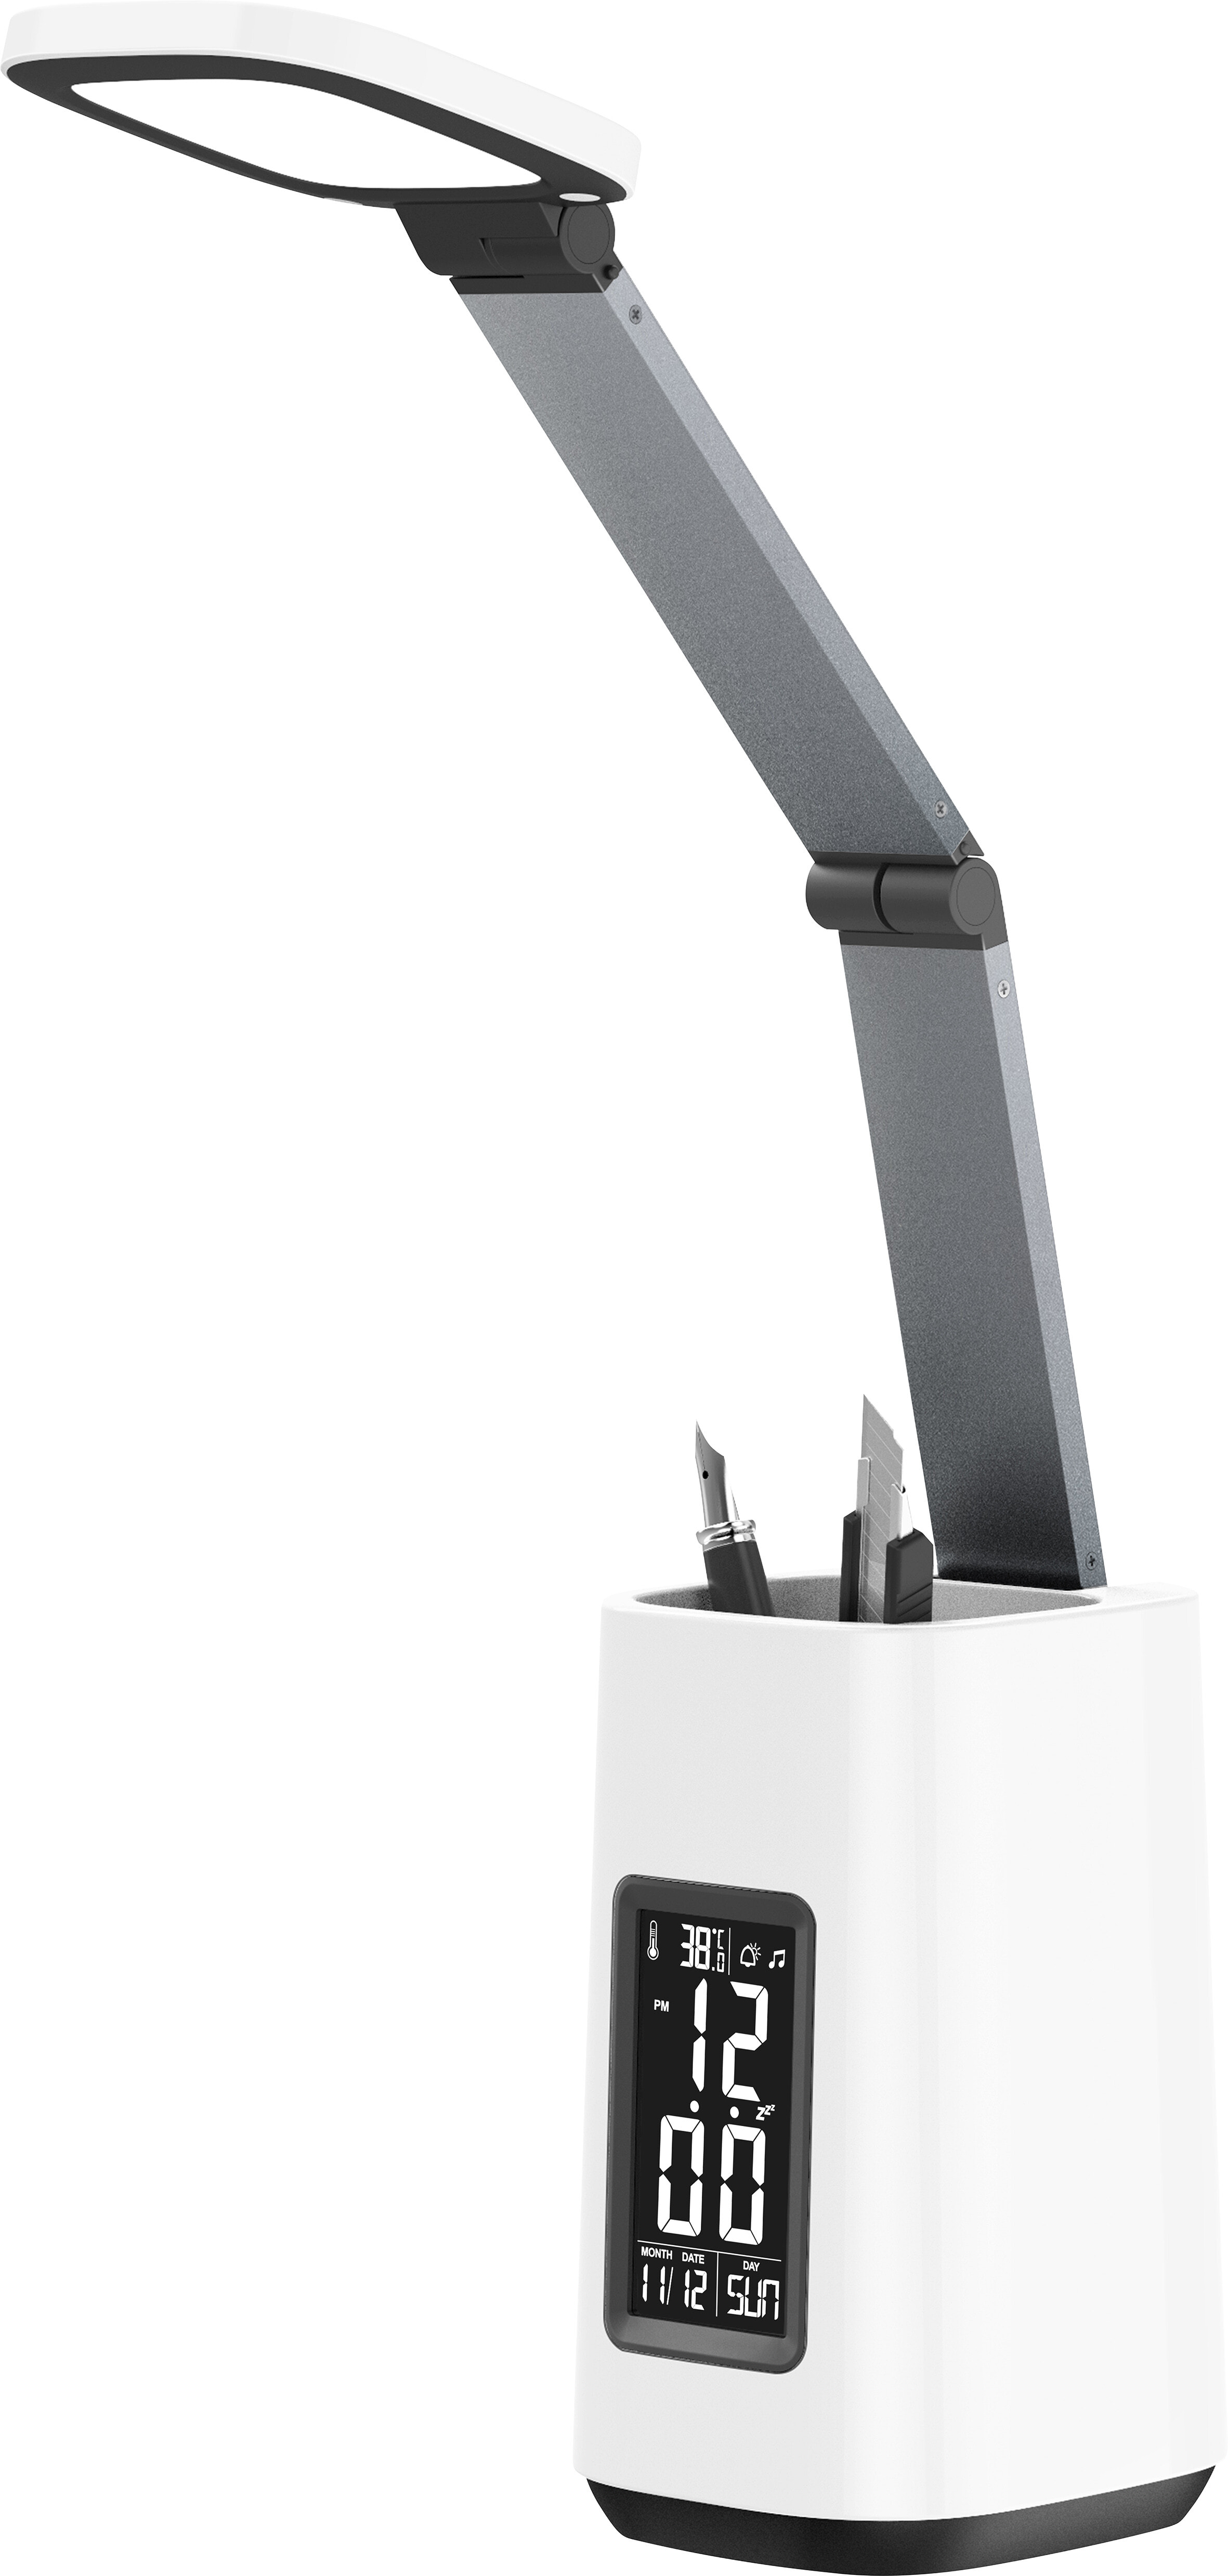 AJE-TECHNIC LED desk lamp with display white - White - Plastic - Universal - Modern - LED - ISO 9001 - ISO 14001